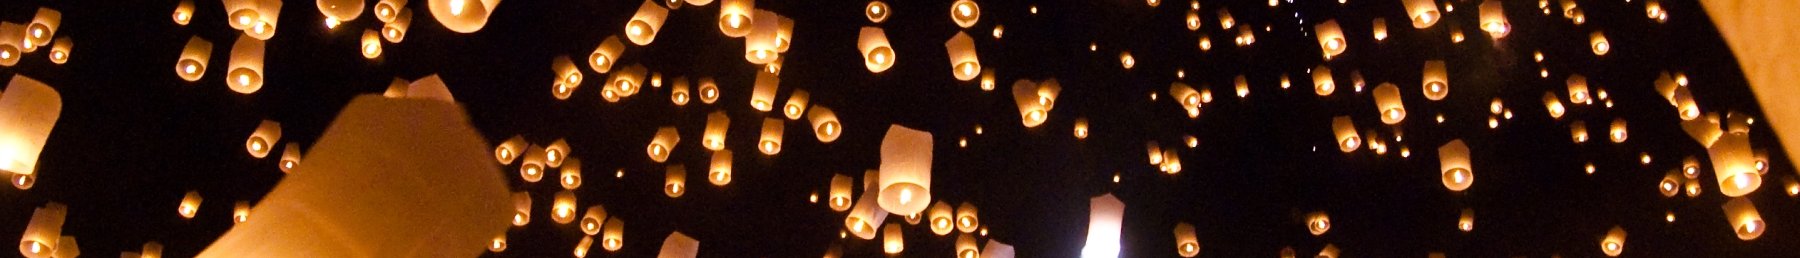 Yi peng sky lantern festival